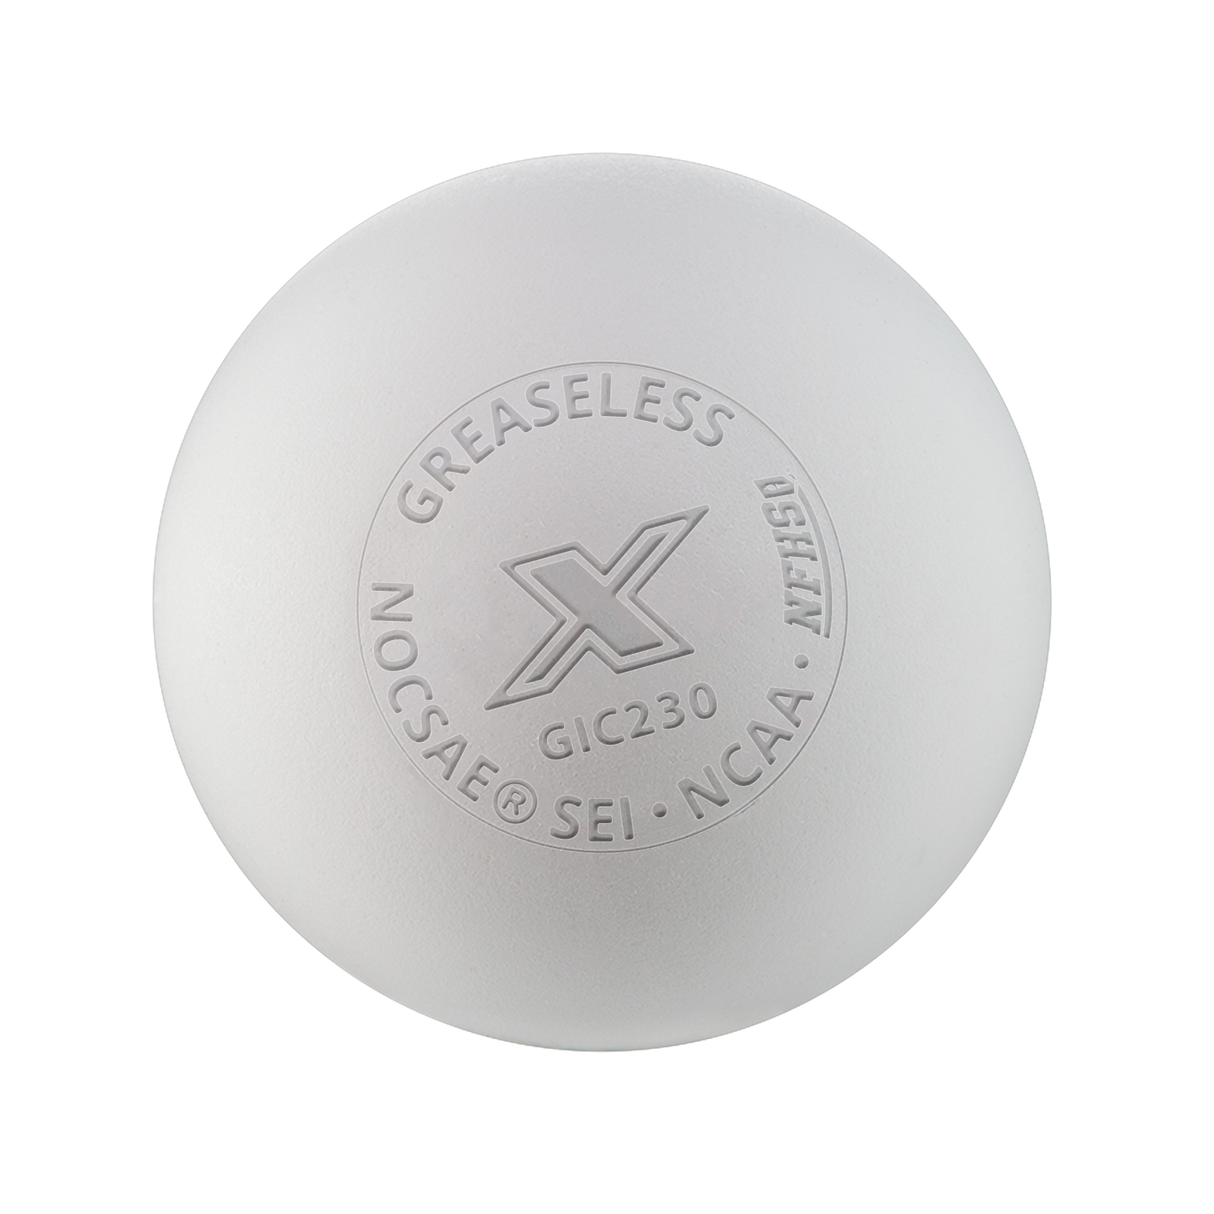 PEARL X Lacrosse Balls - Greaseless